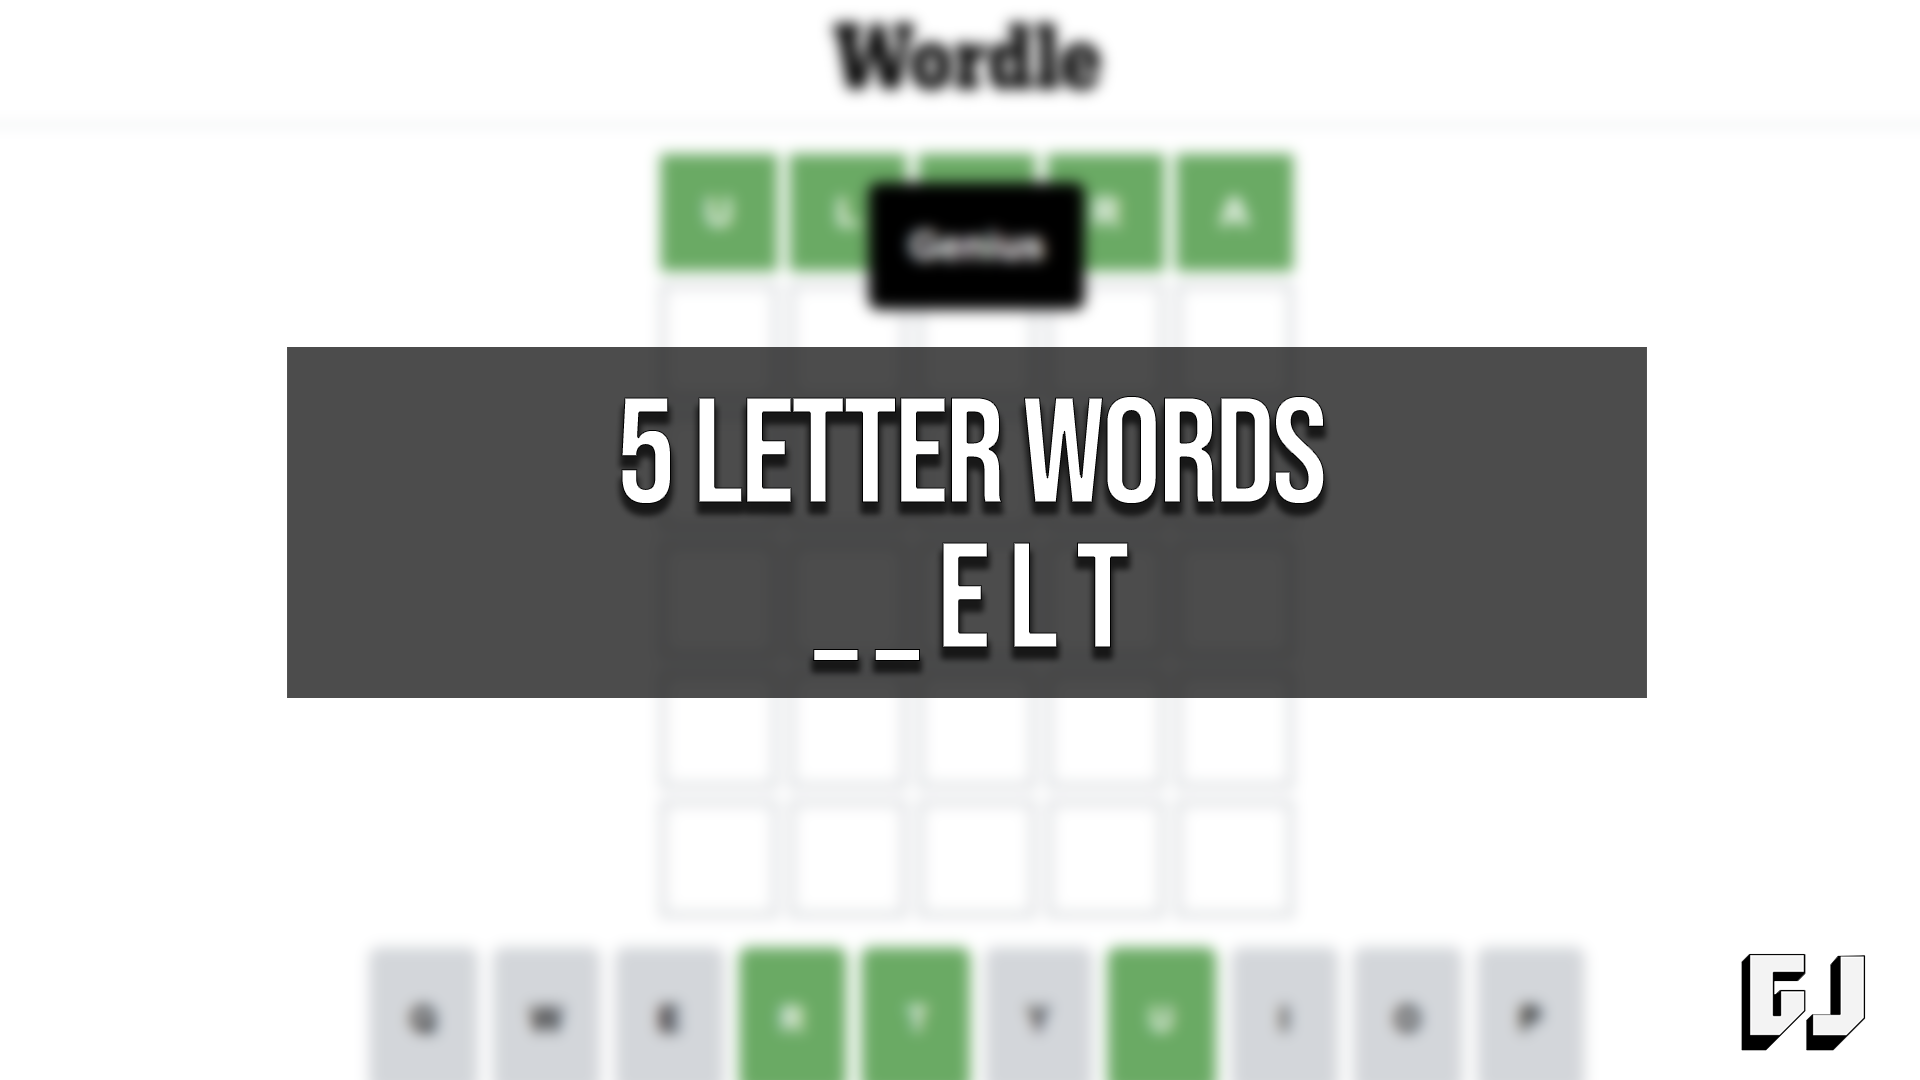 5 letter words with elt